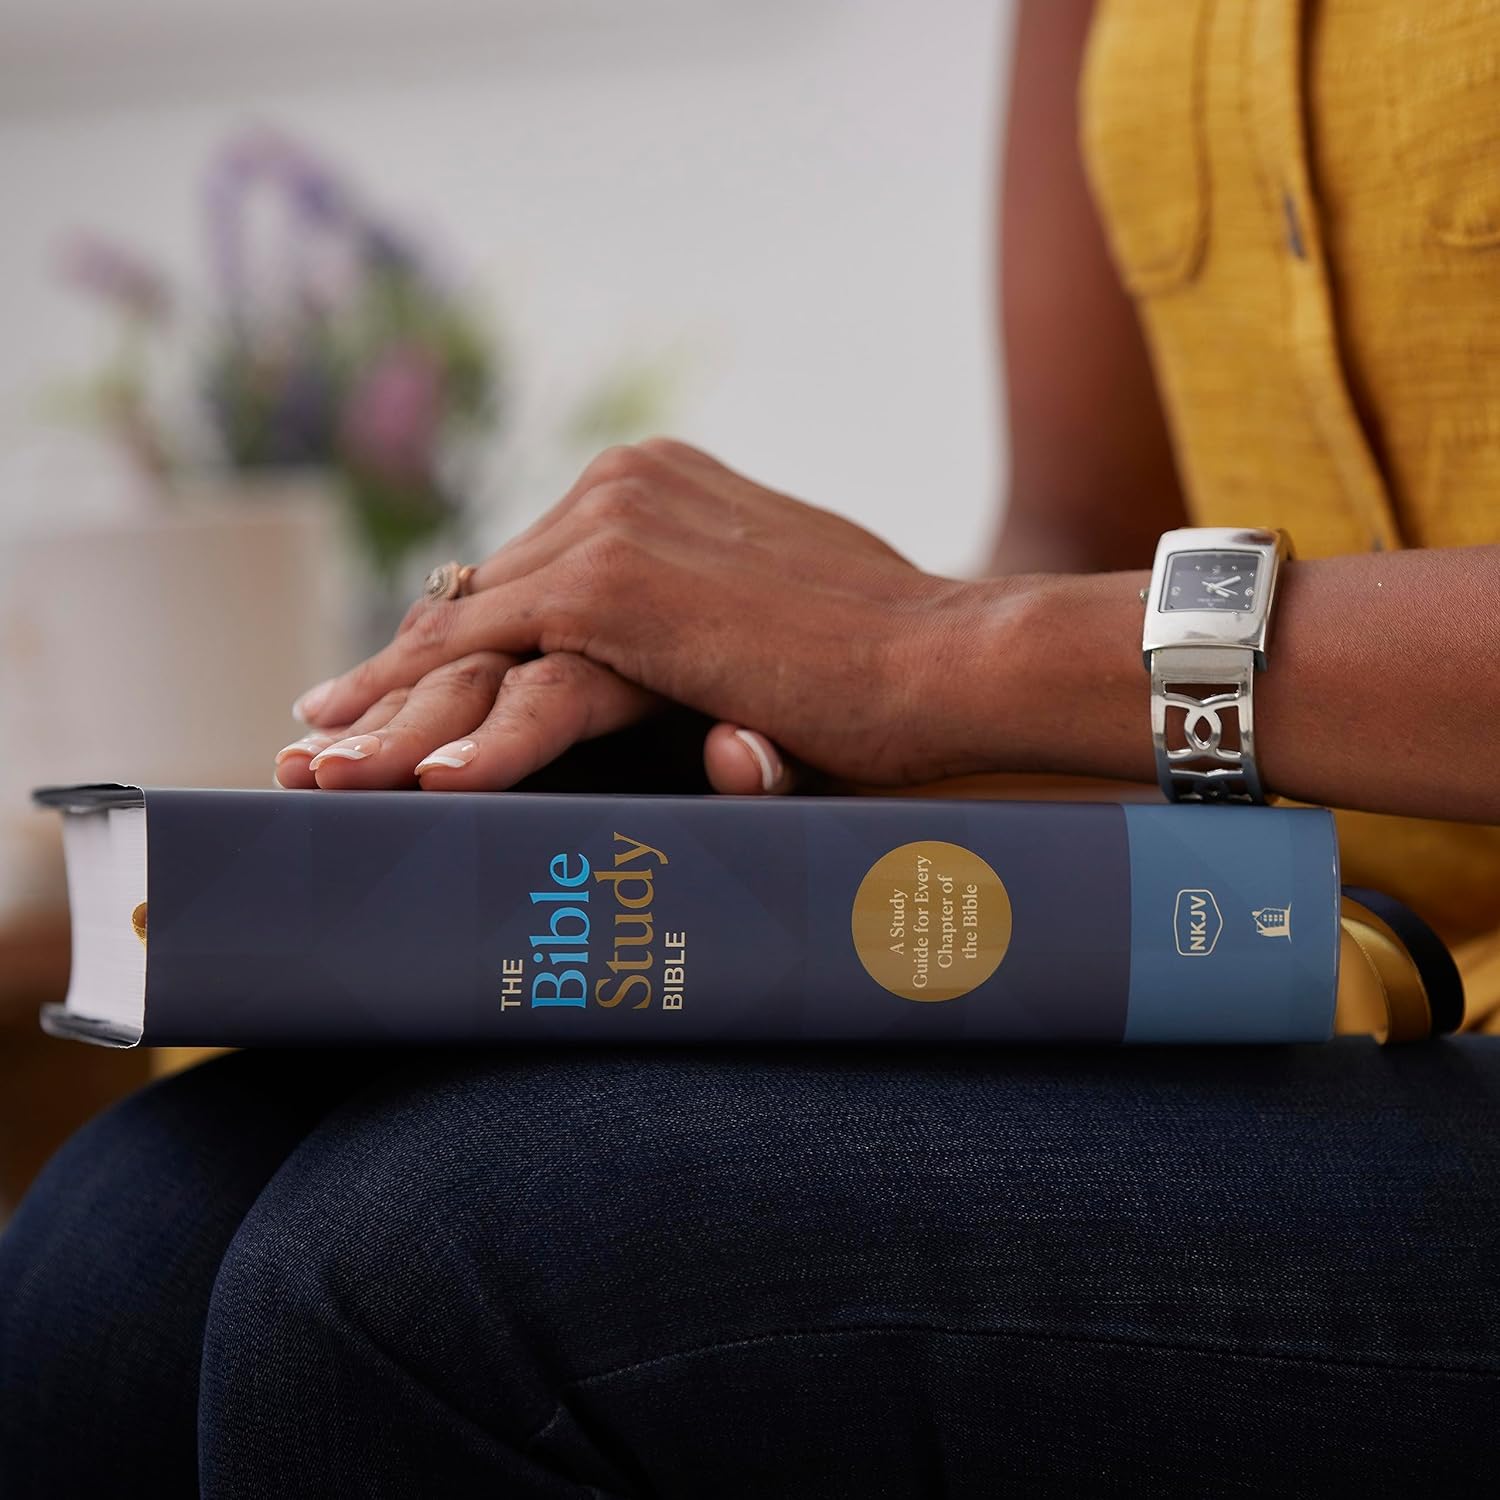 NKJV The Bible Study Bible, Comfort Print, Hardcover